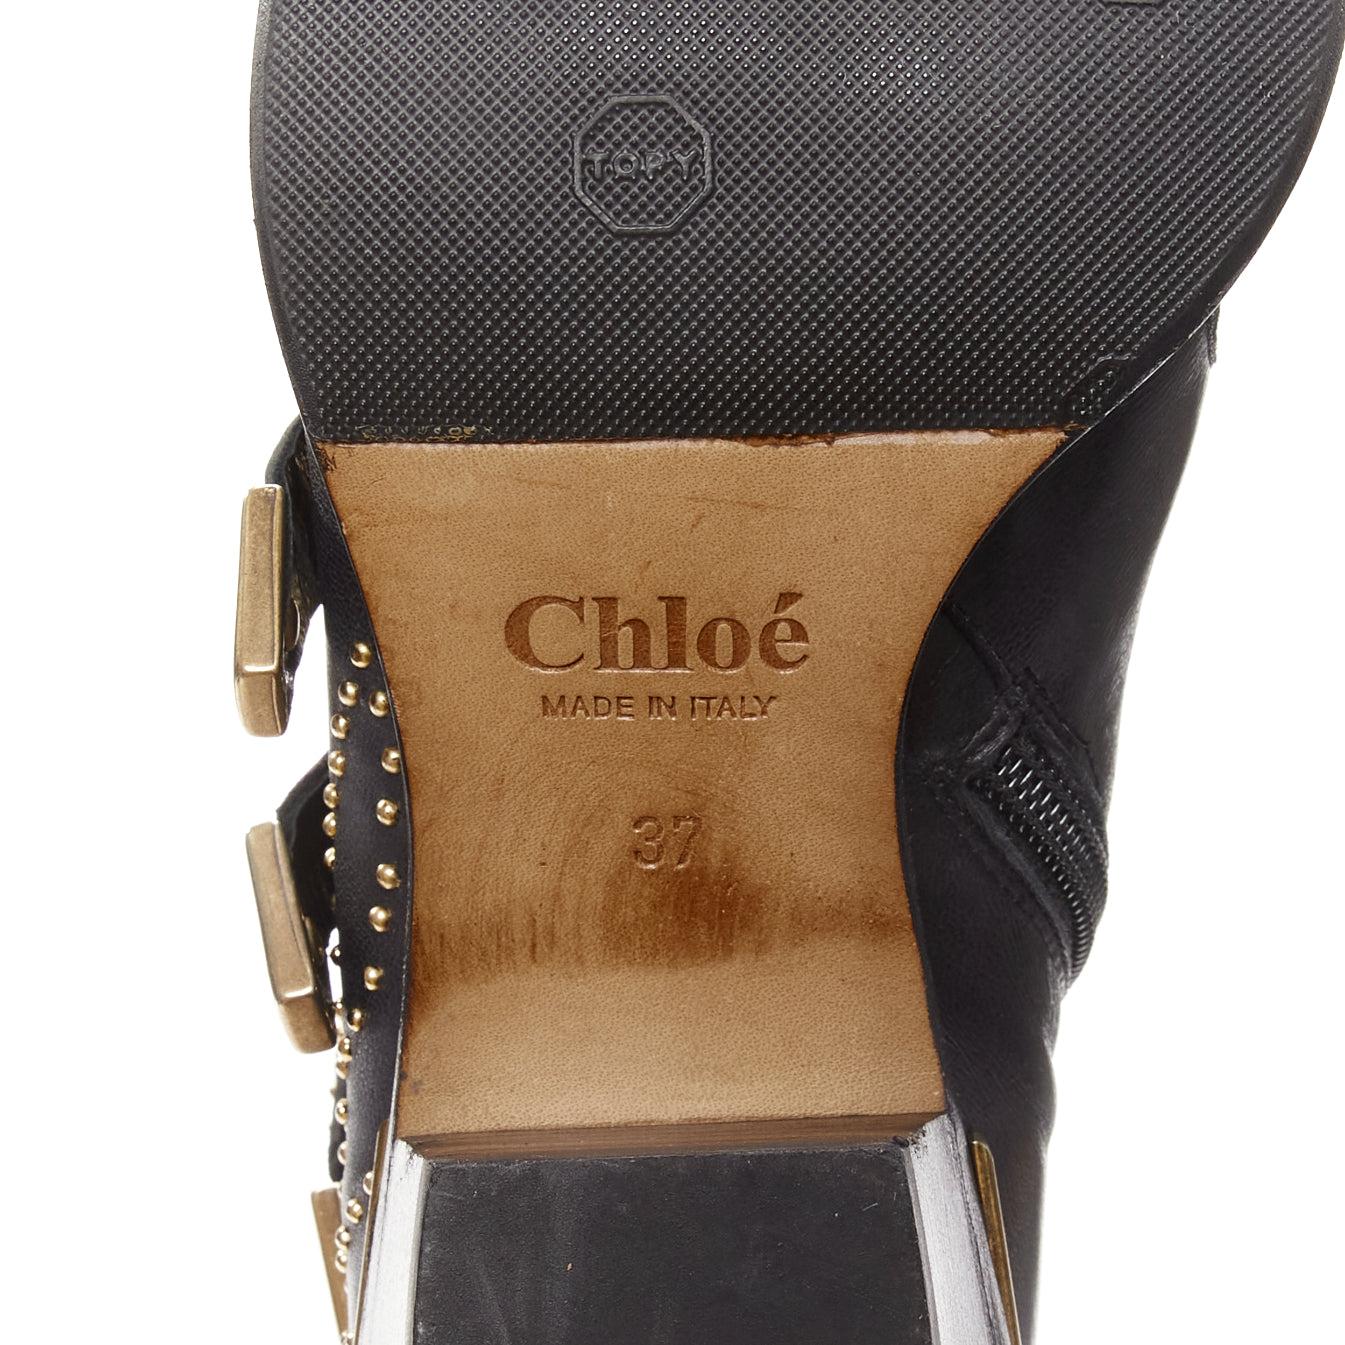 CHLOE Susanna black gold micro stud floral embellished buckle ankle boot EU37 3